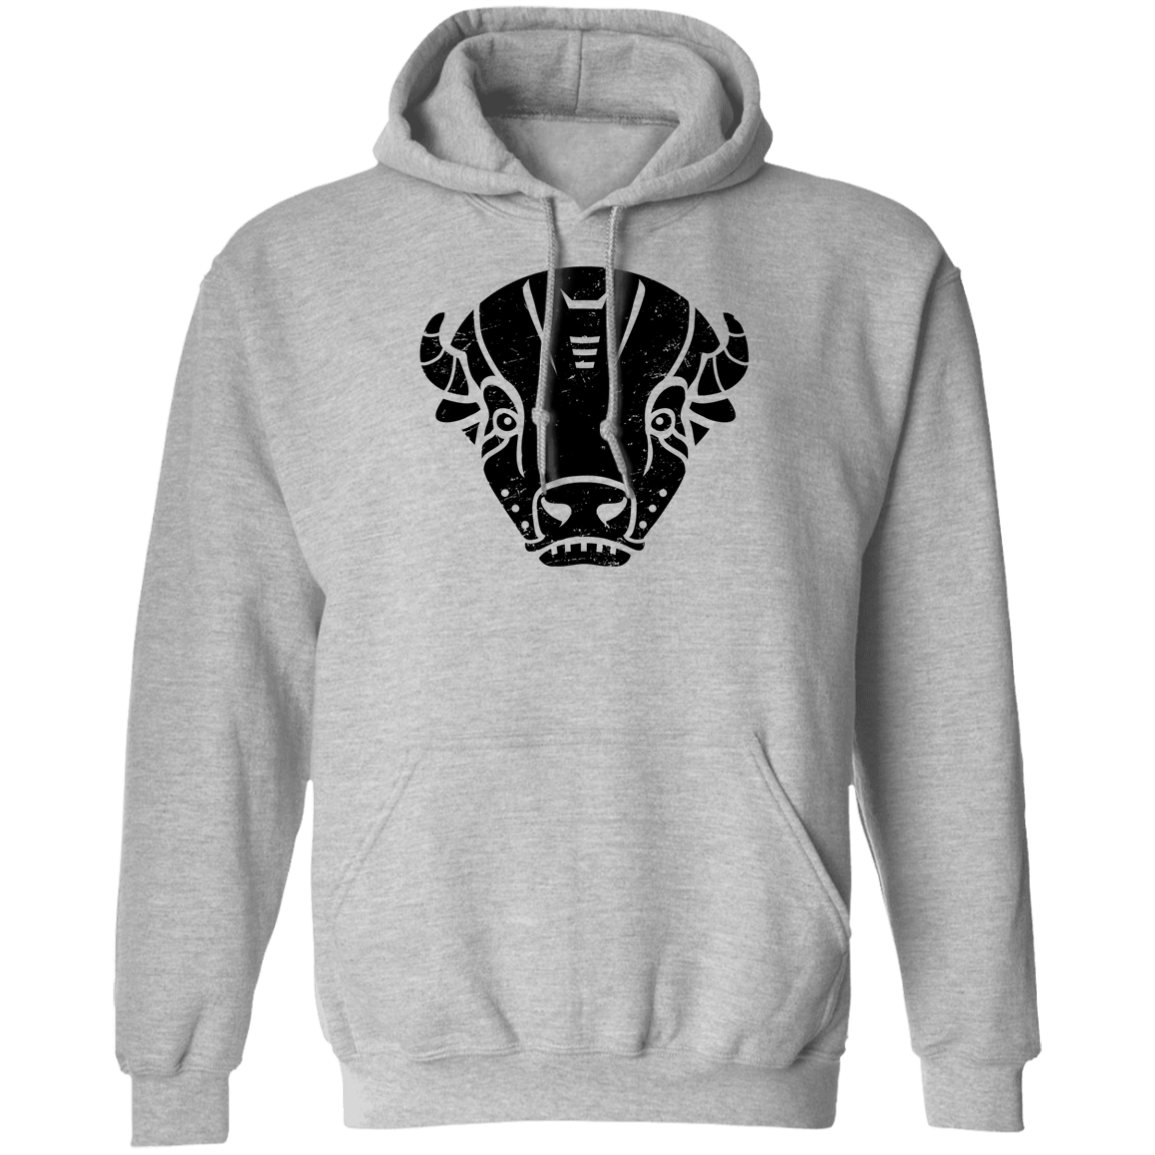 Black Distressed Emblem Hoodies for Adults (Bison/Panzer)